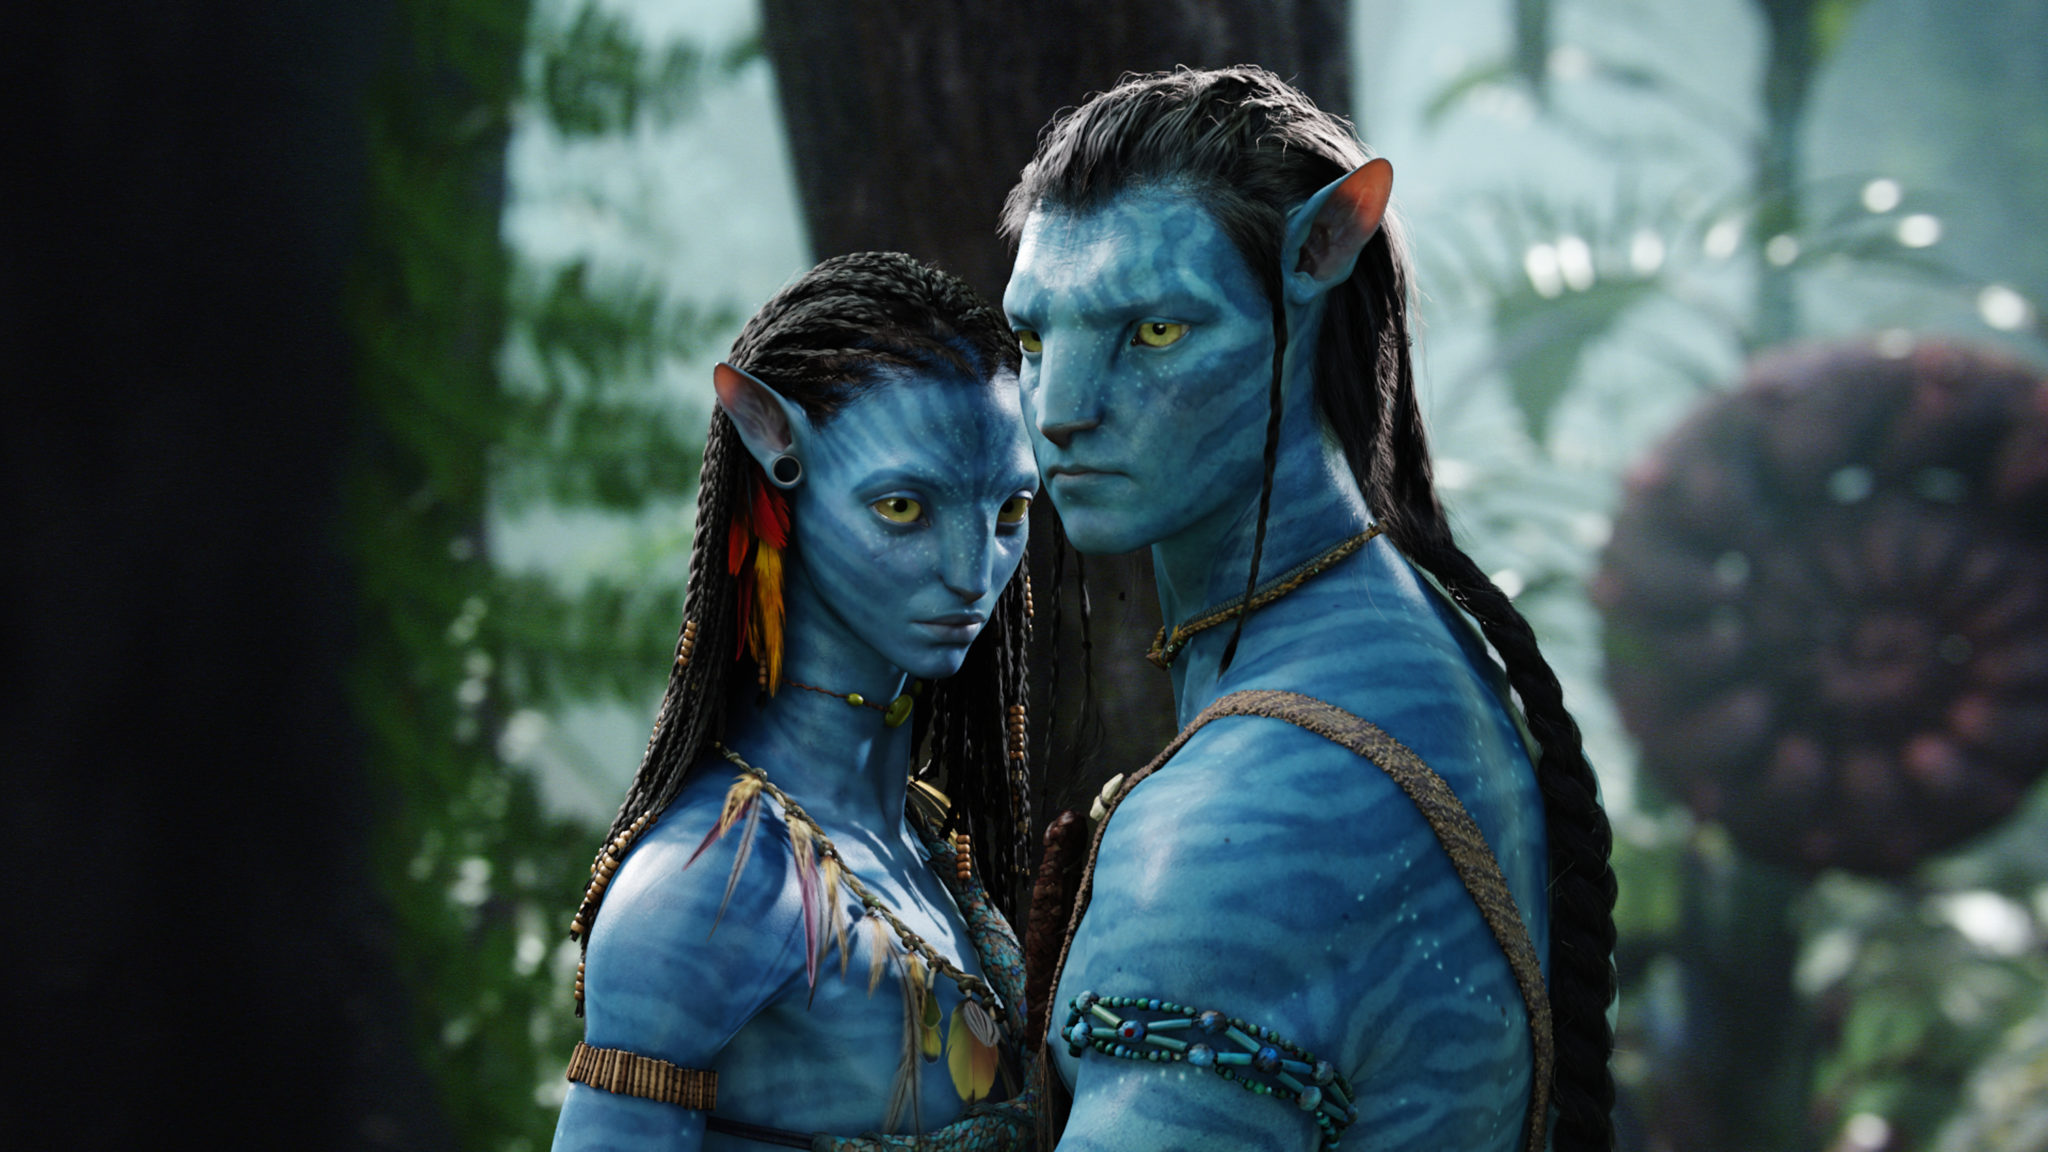 Star Wars, Avatar, Among Disney’s Latest Box Office Delays